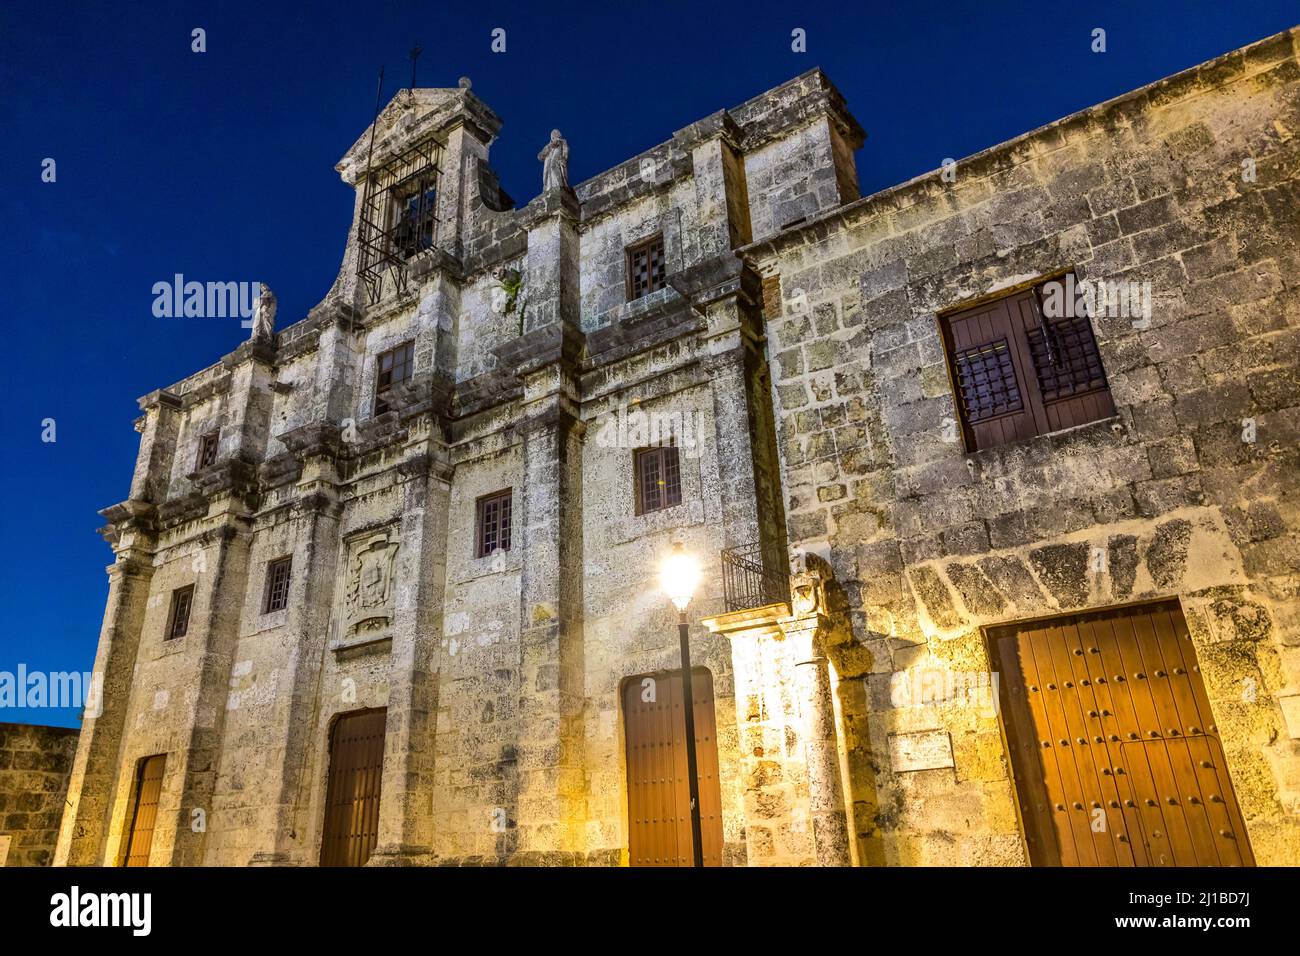 CASA DE LOS JESUITAS, COLONIAL QUARTER LISTED AS A WORLD HERITAGE SITE BY UNESCO, SANTO DOMINGO, DOMINICAN REPUBLIC Stock Photo